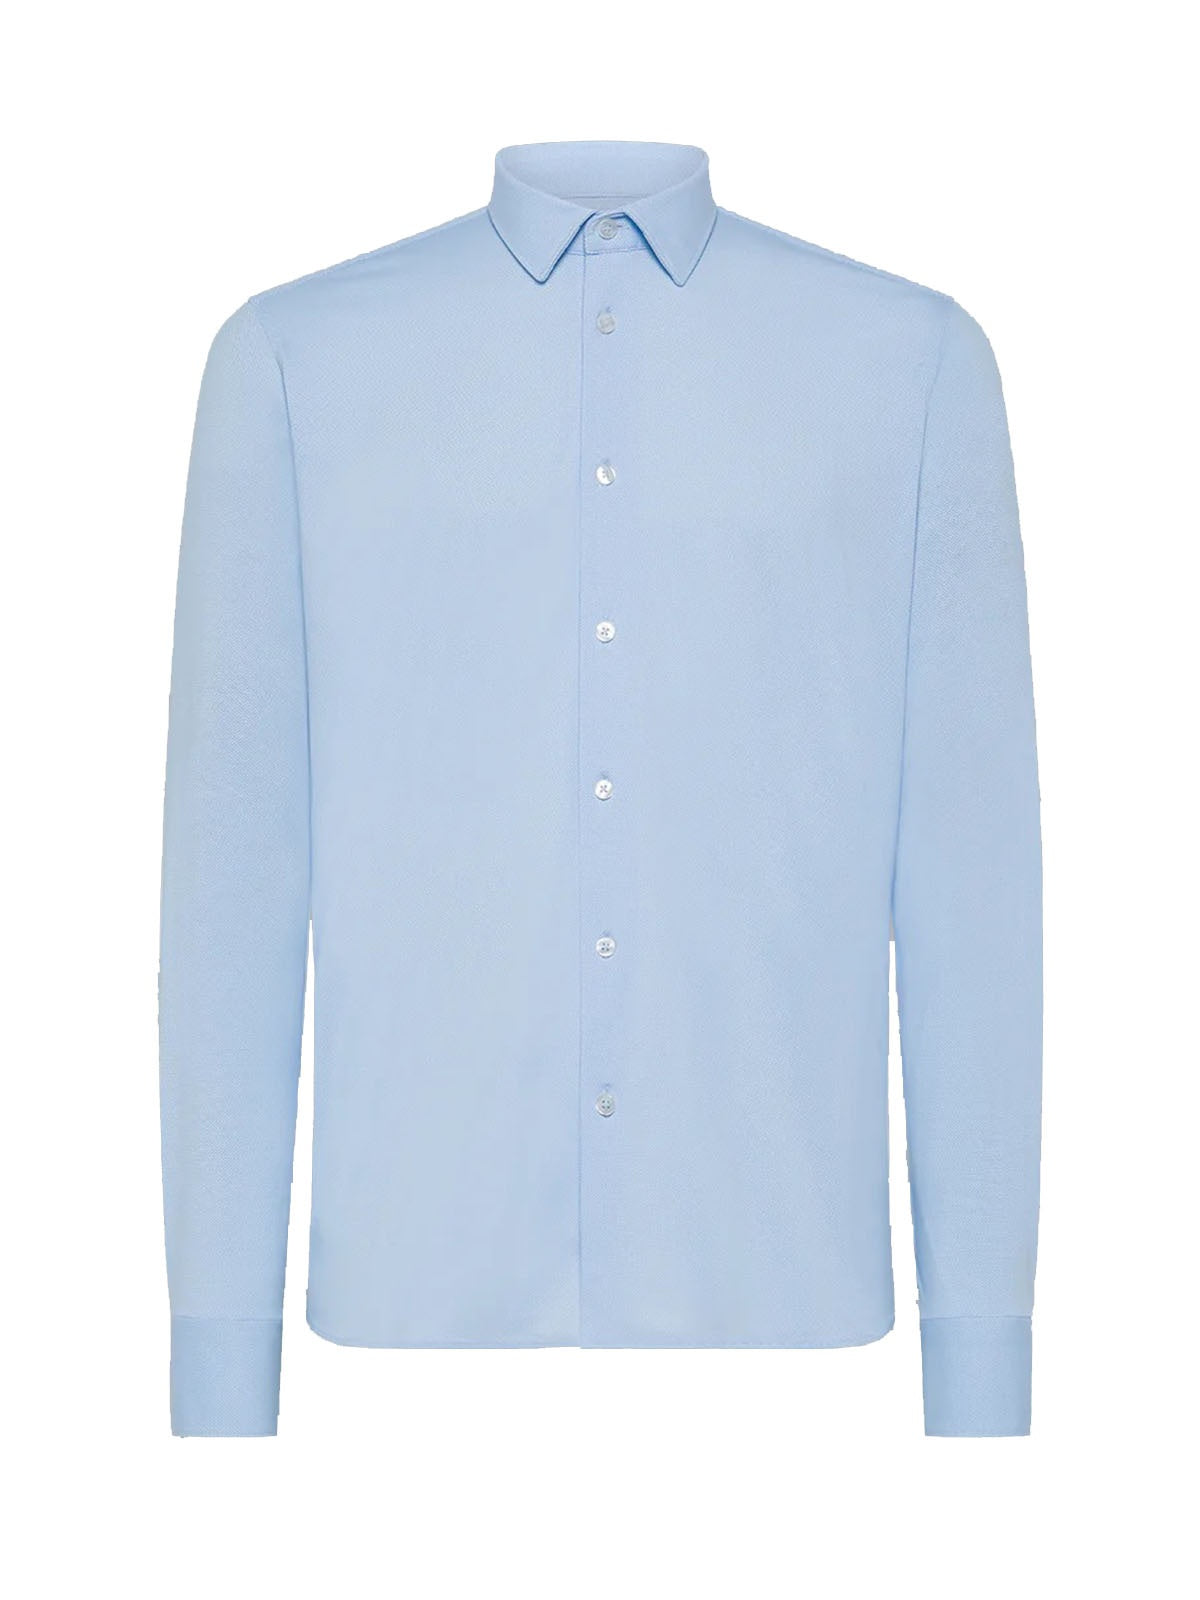 Camicie casual Uomo RRD - Oxford Jacquard Open Shirt - Celeste